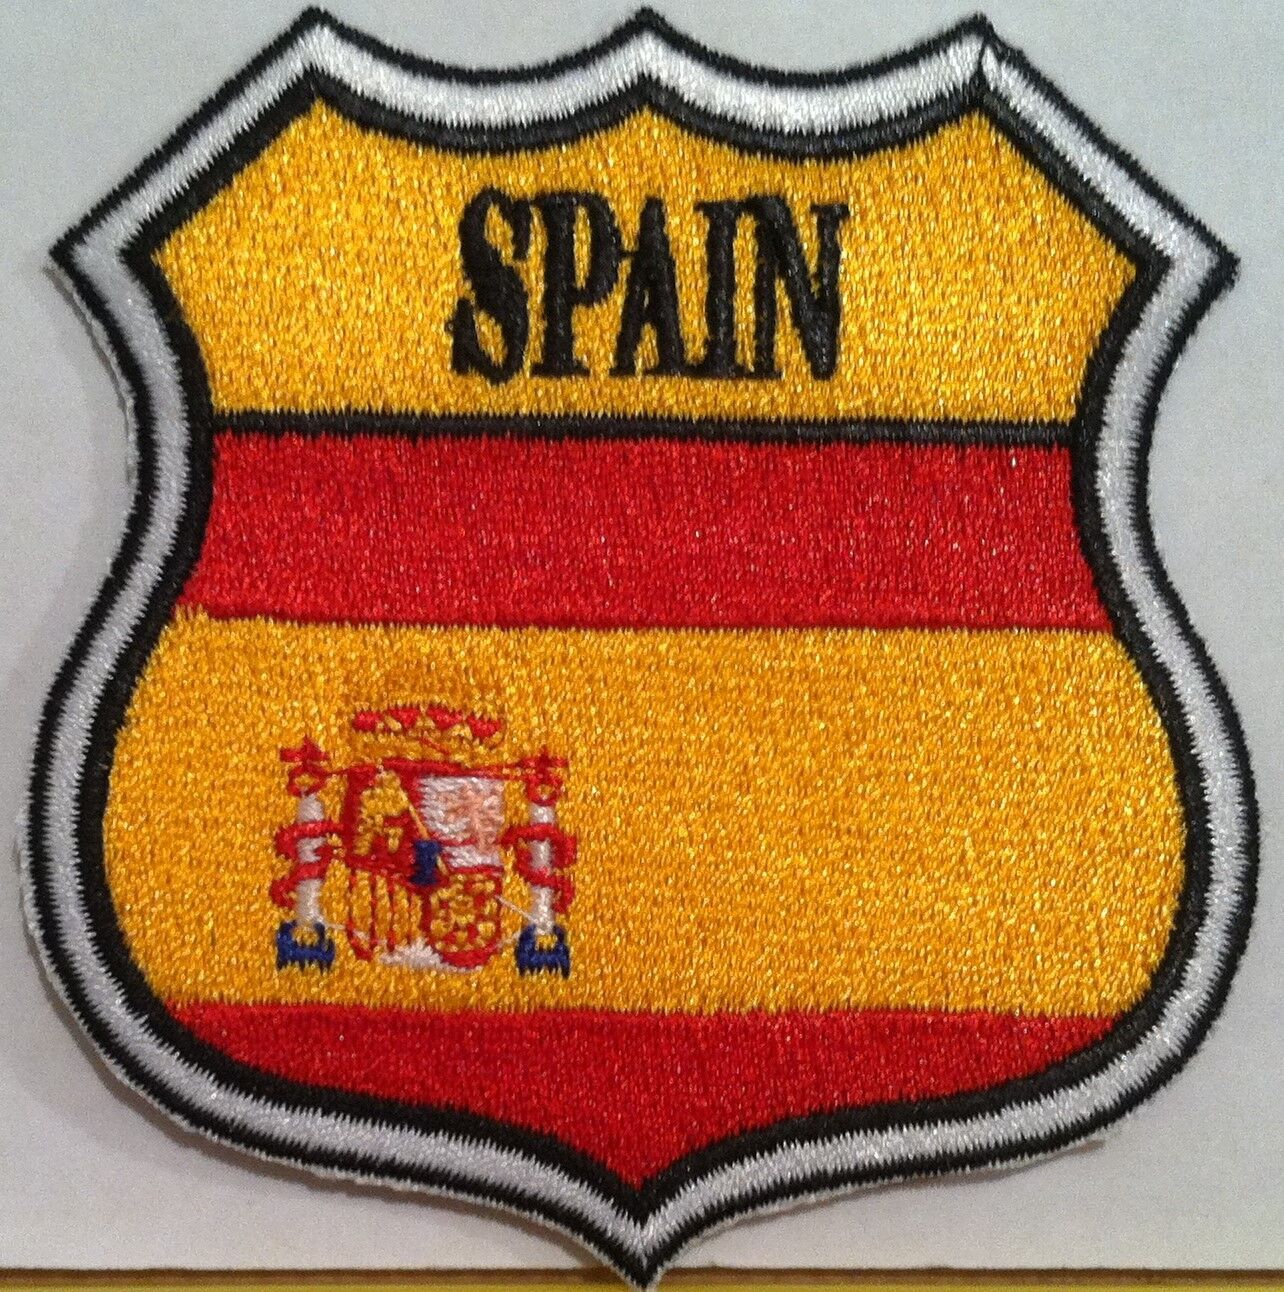 Espana / Spain Crest Tactical Military Flag Iron On Patch Shoulder Emblem 